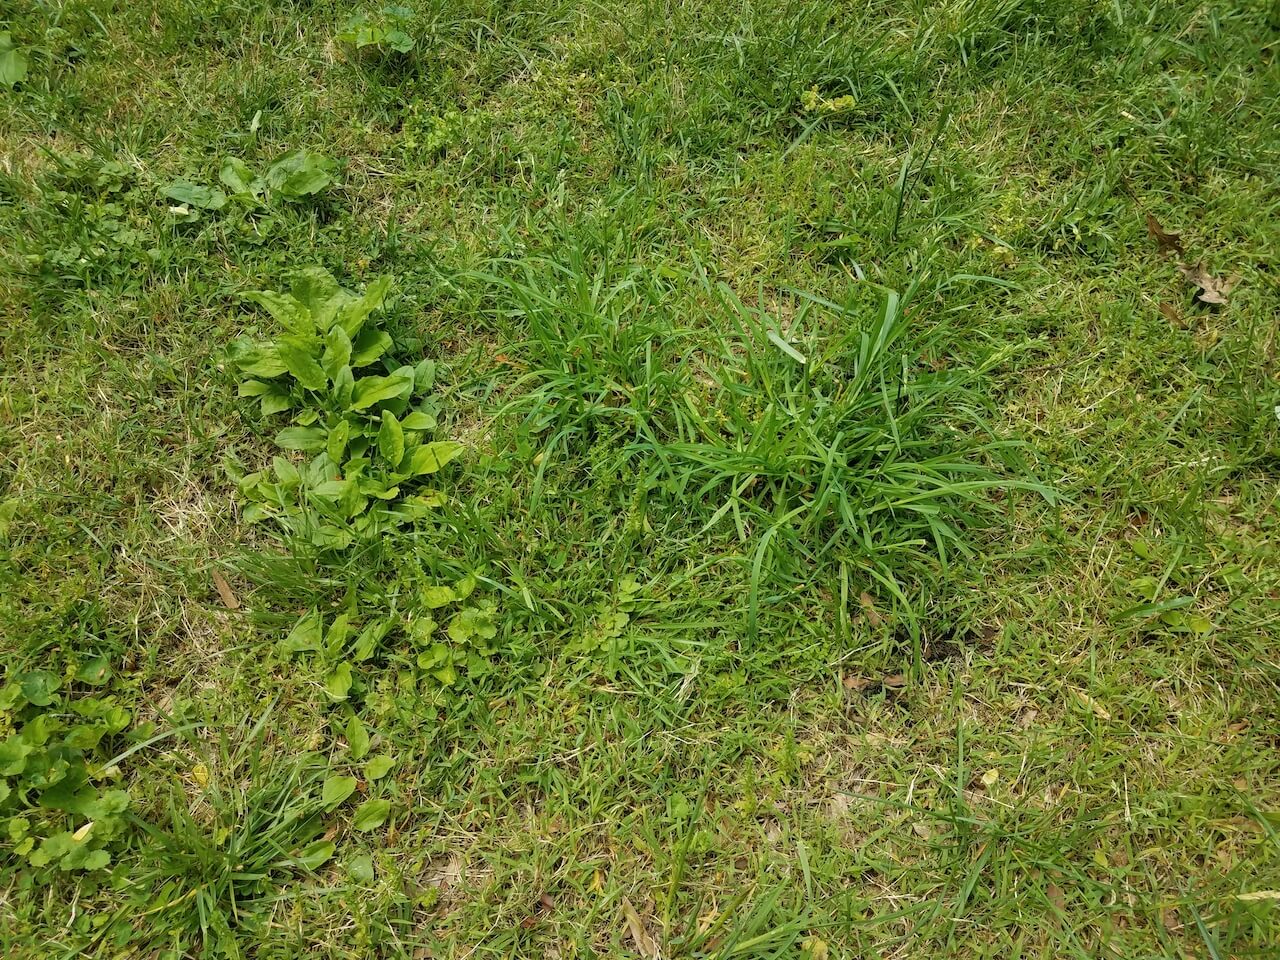 Weed growing in lawn.